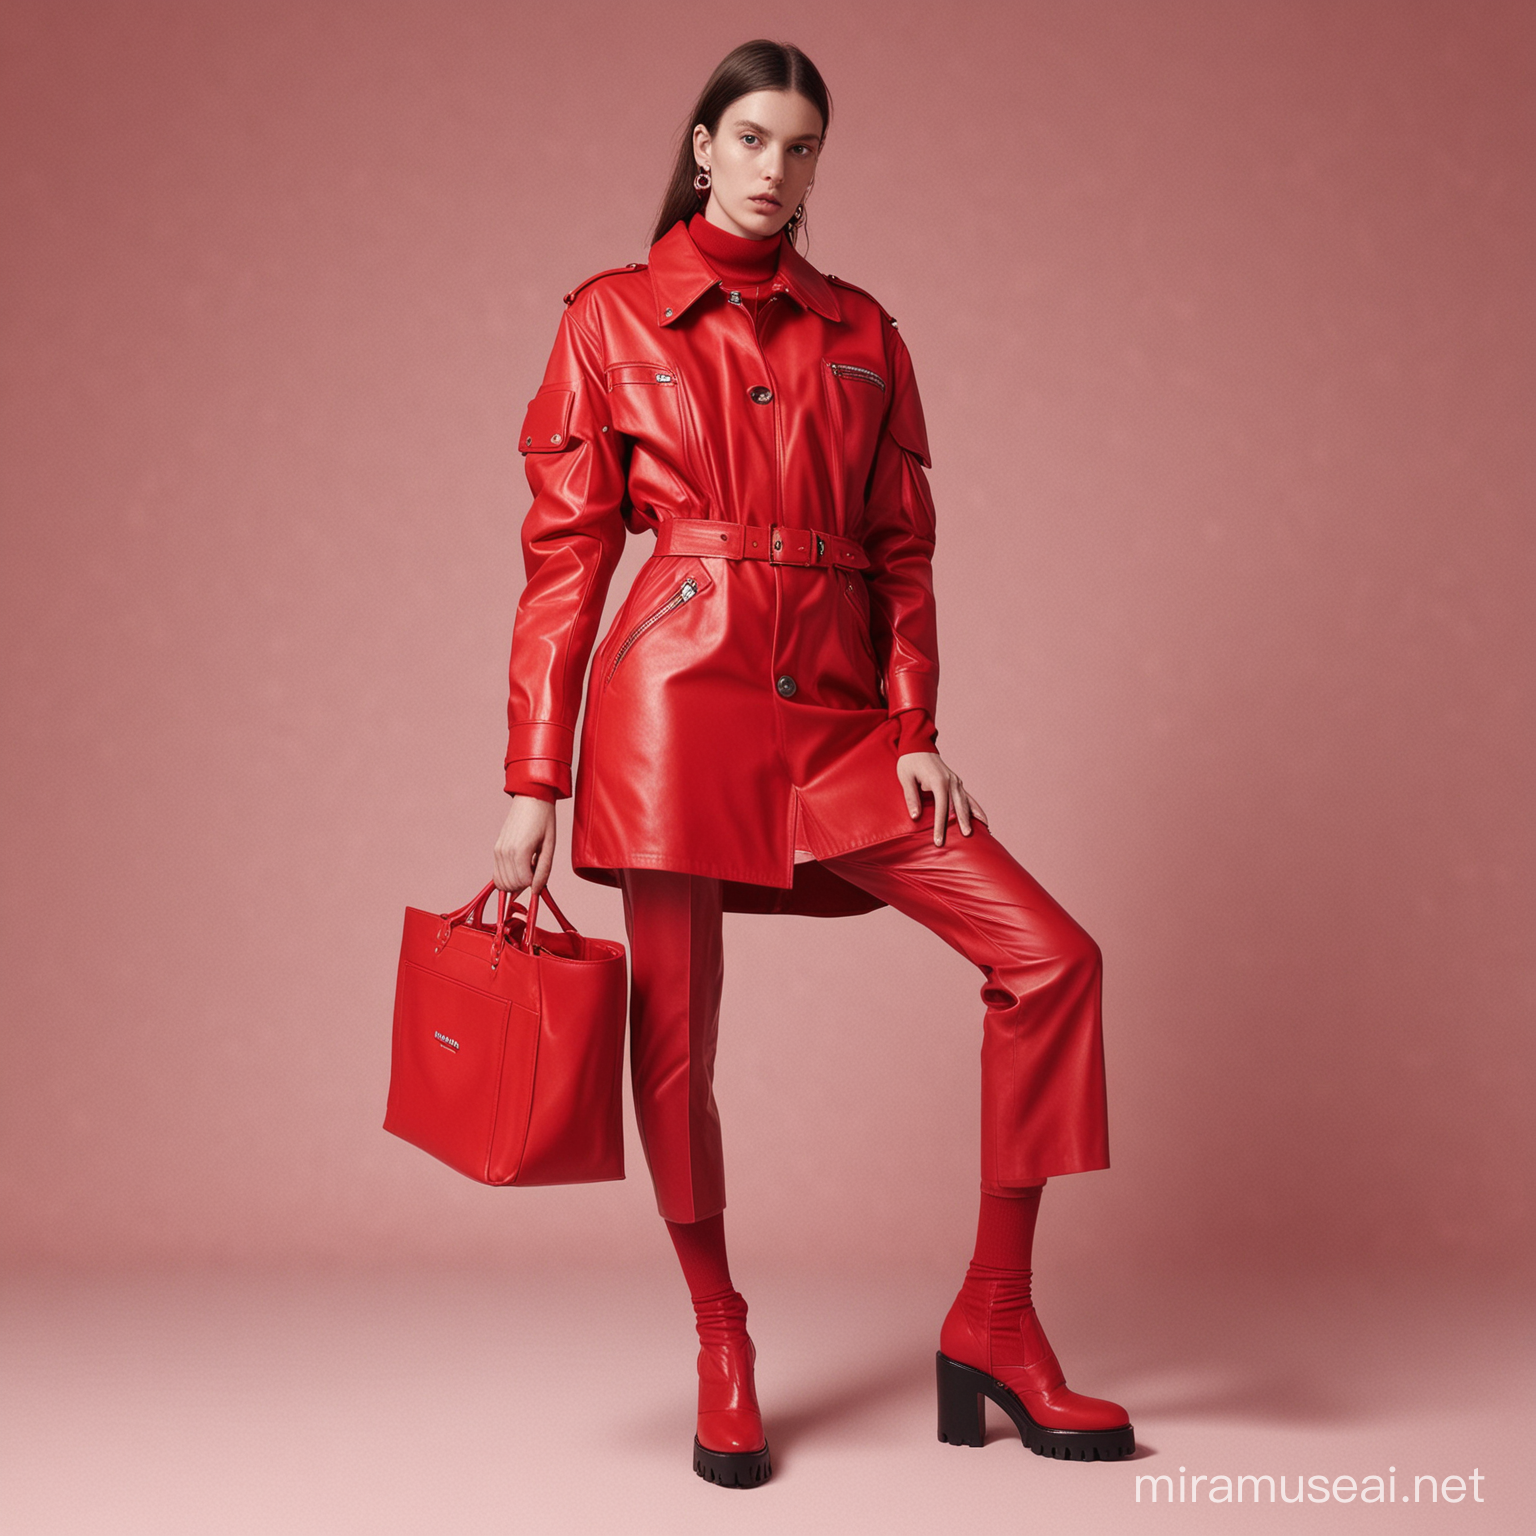 Minimalistic Balenciaga Campaign Featuring Red Set